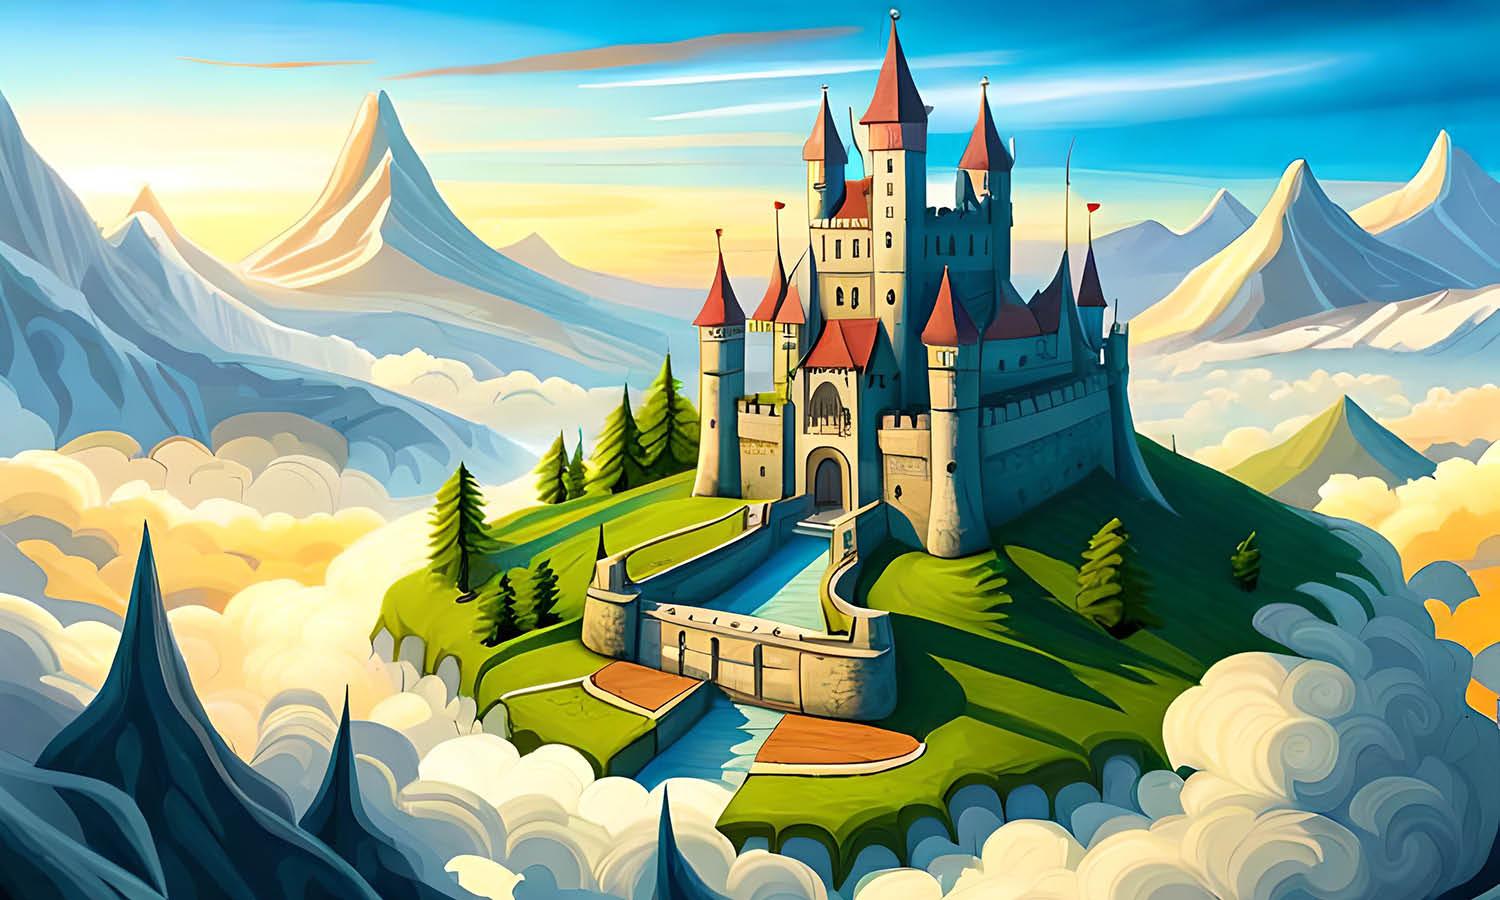 30 Best Castle Illustration Ideas You Should Check - Kreafolk